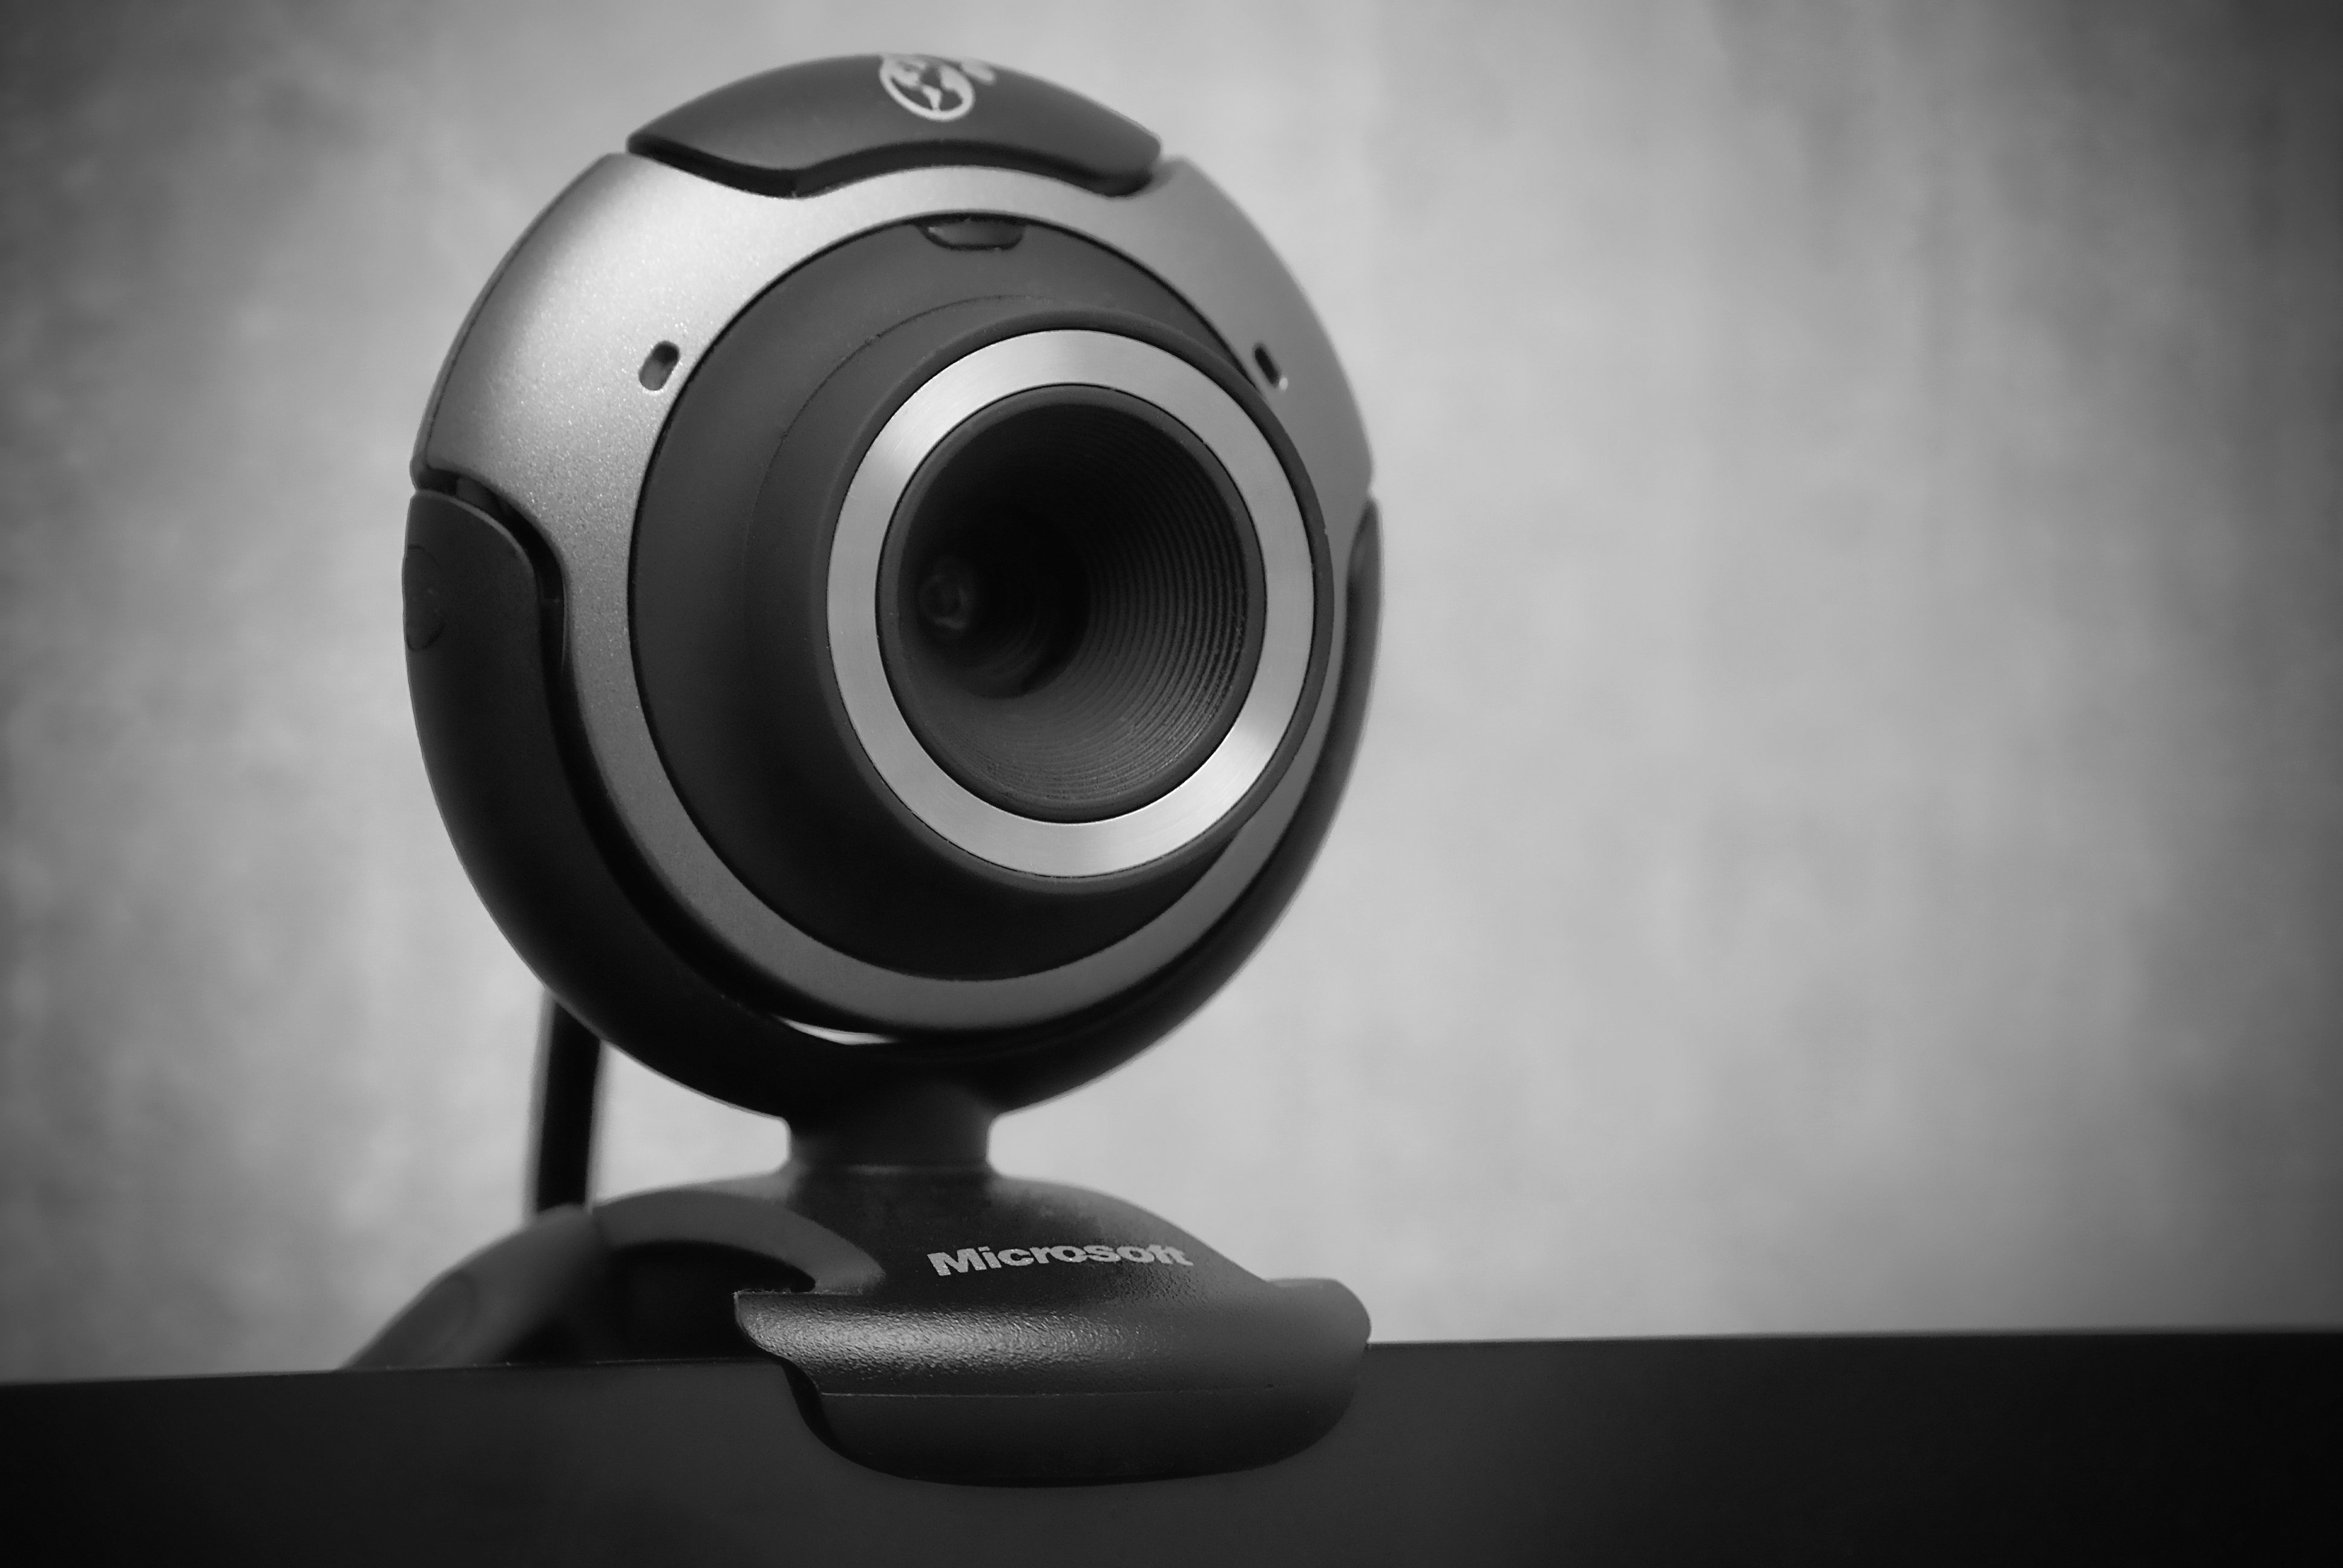 Microsoft webcam